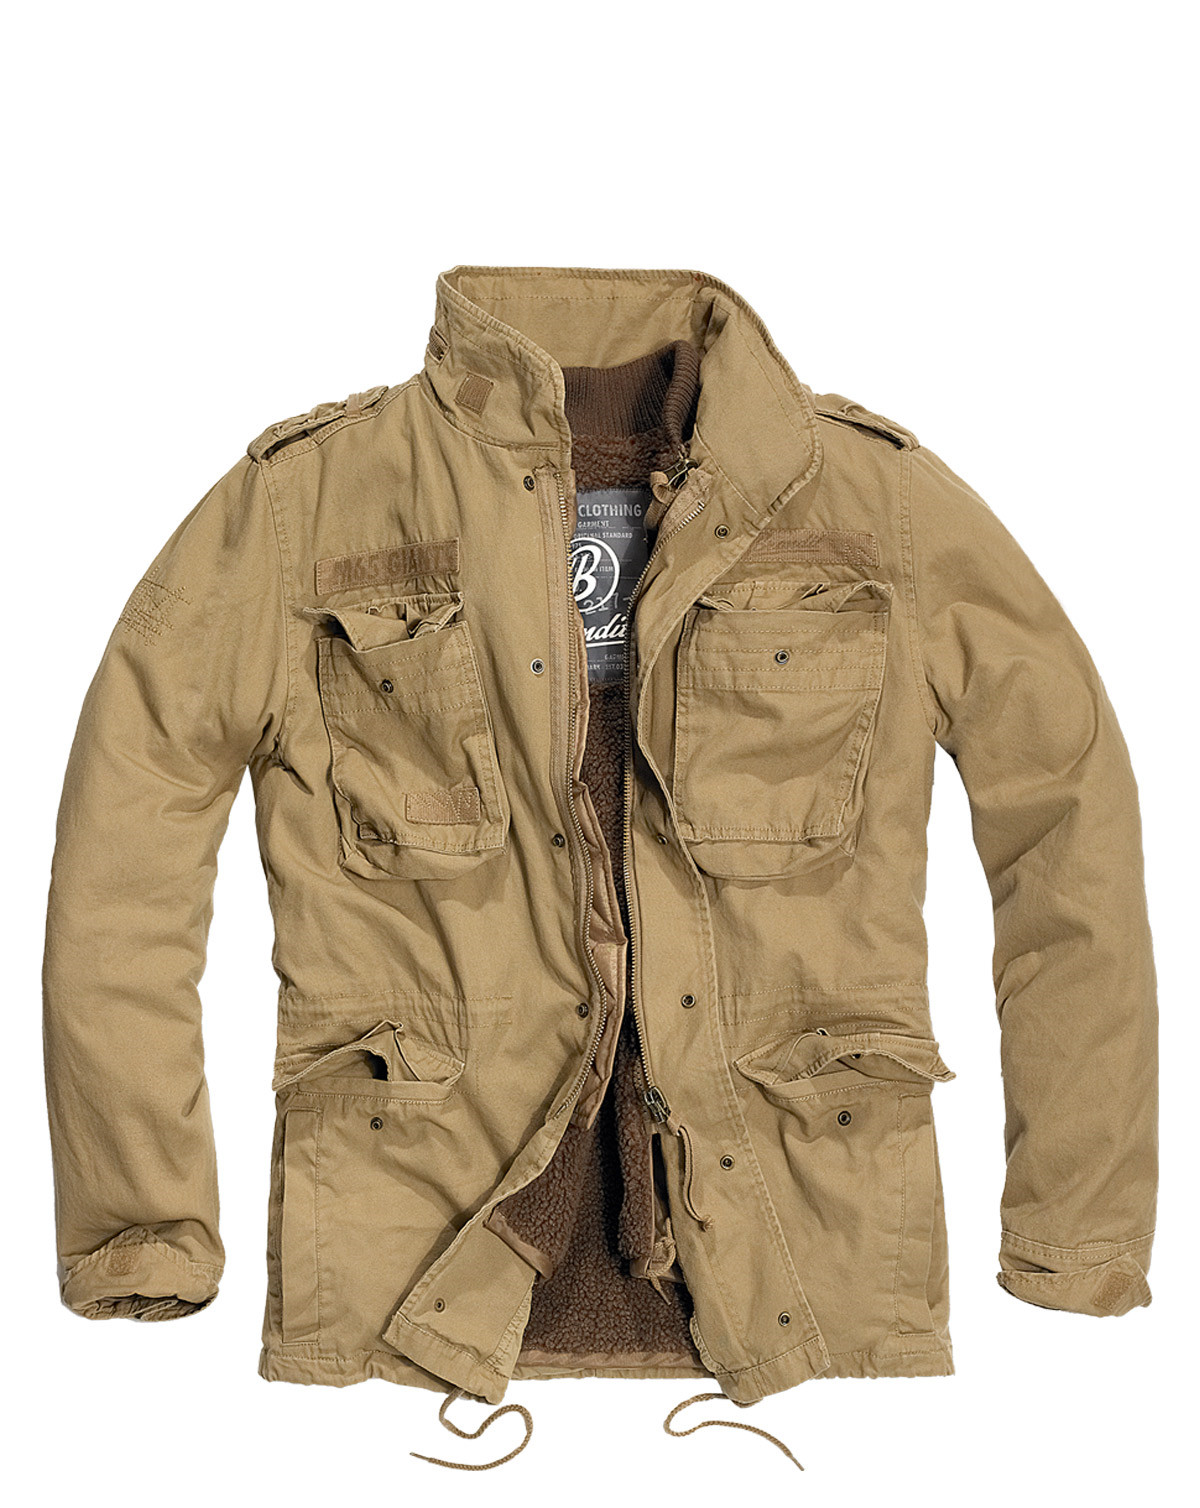 military 1st m65 jacket